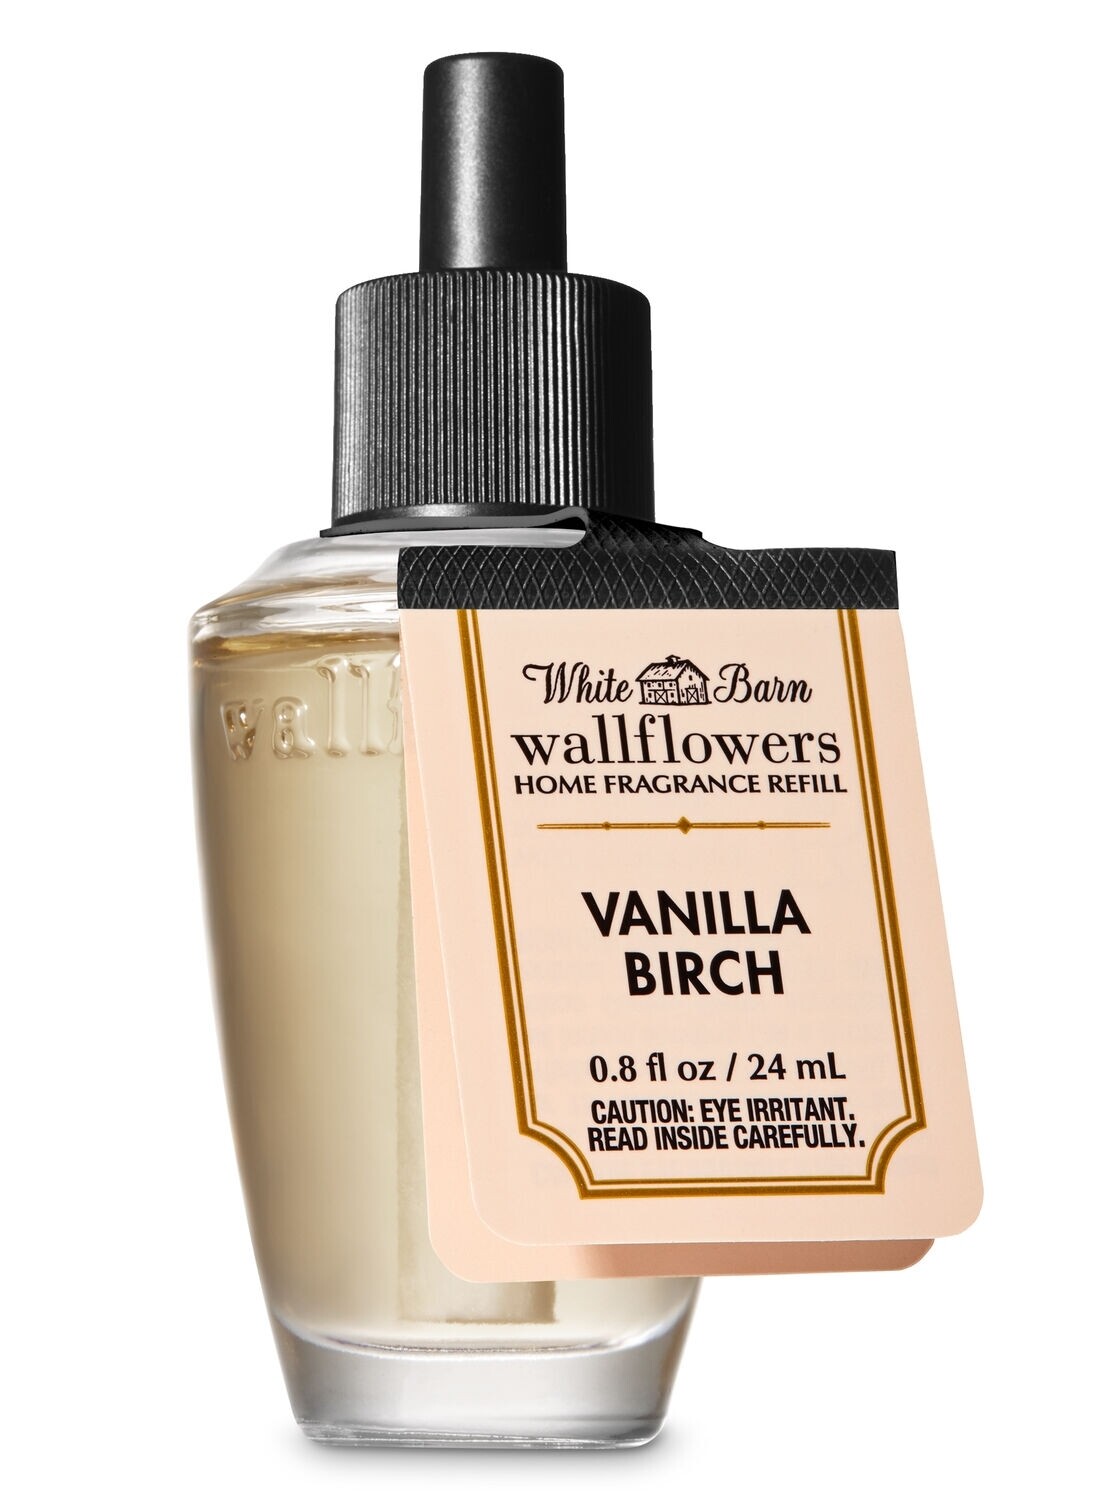 Bath and body works wallflower refill- Vanilla Birch